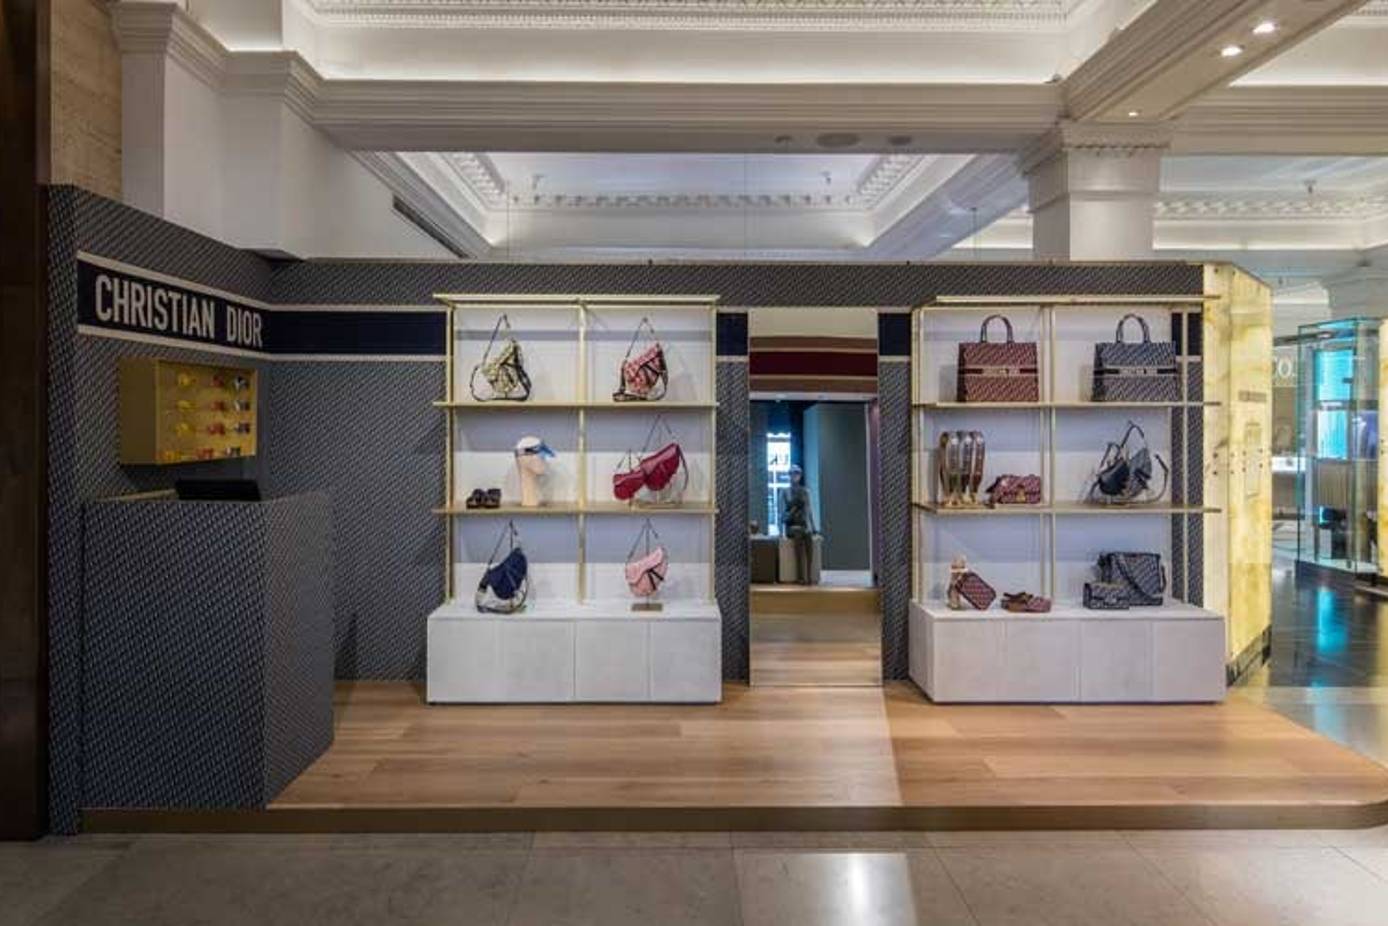 Inside London's Dior pop-up